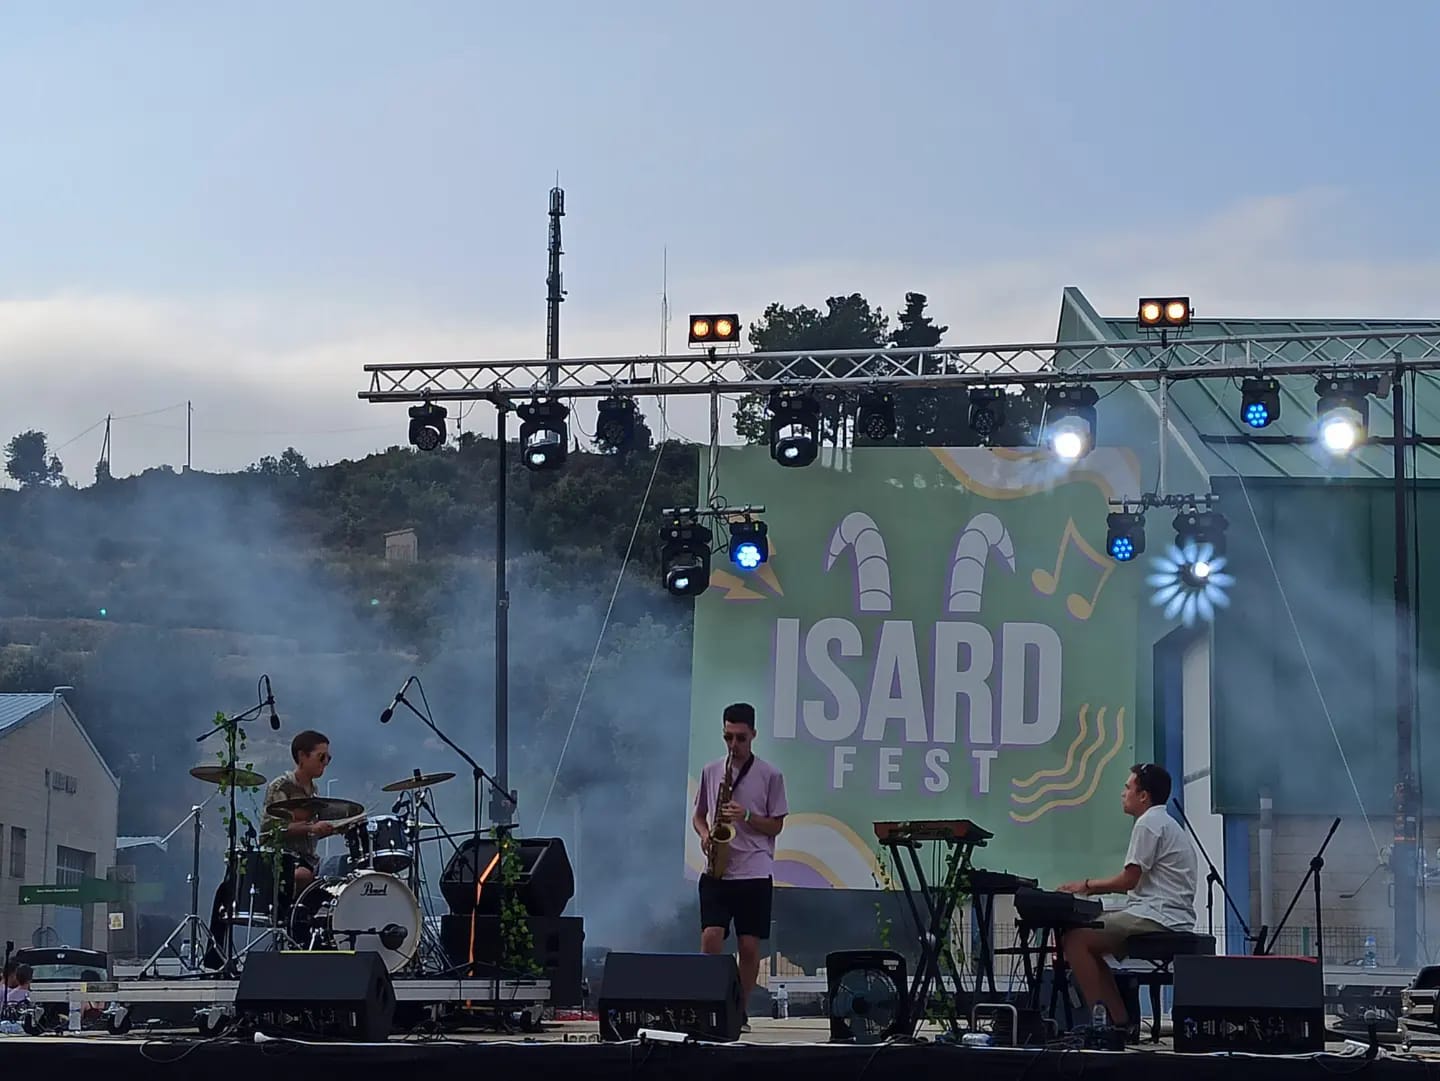 Scorpio d’Eufòria, Socunbohemio i Genkie,  artistes confirmats de l’Isard Fest